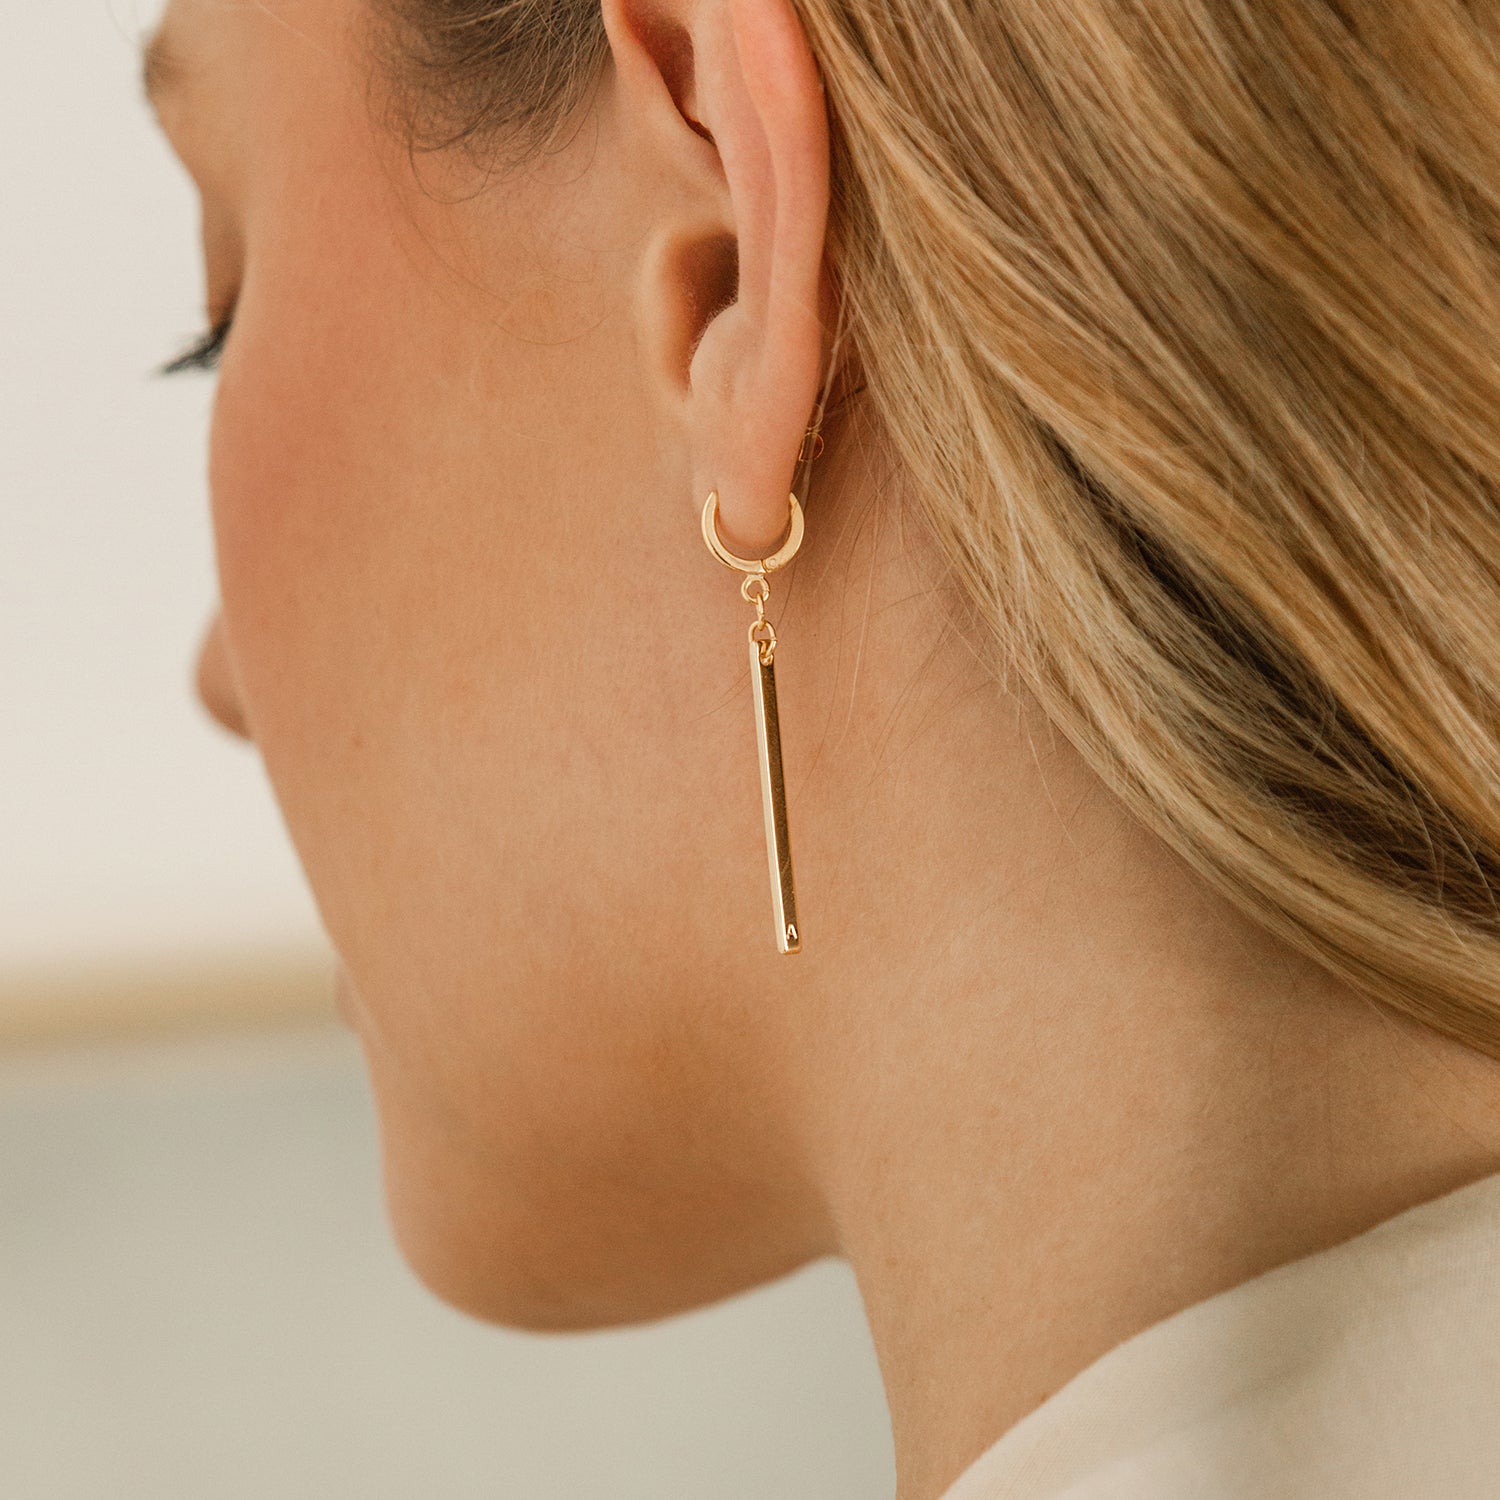 Buy Custom Minimalist Long Dangle Earrings - Elegant Jewelry at Petite Boutique